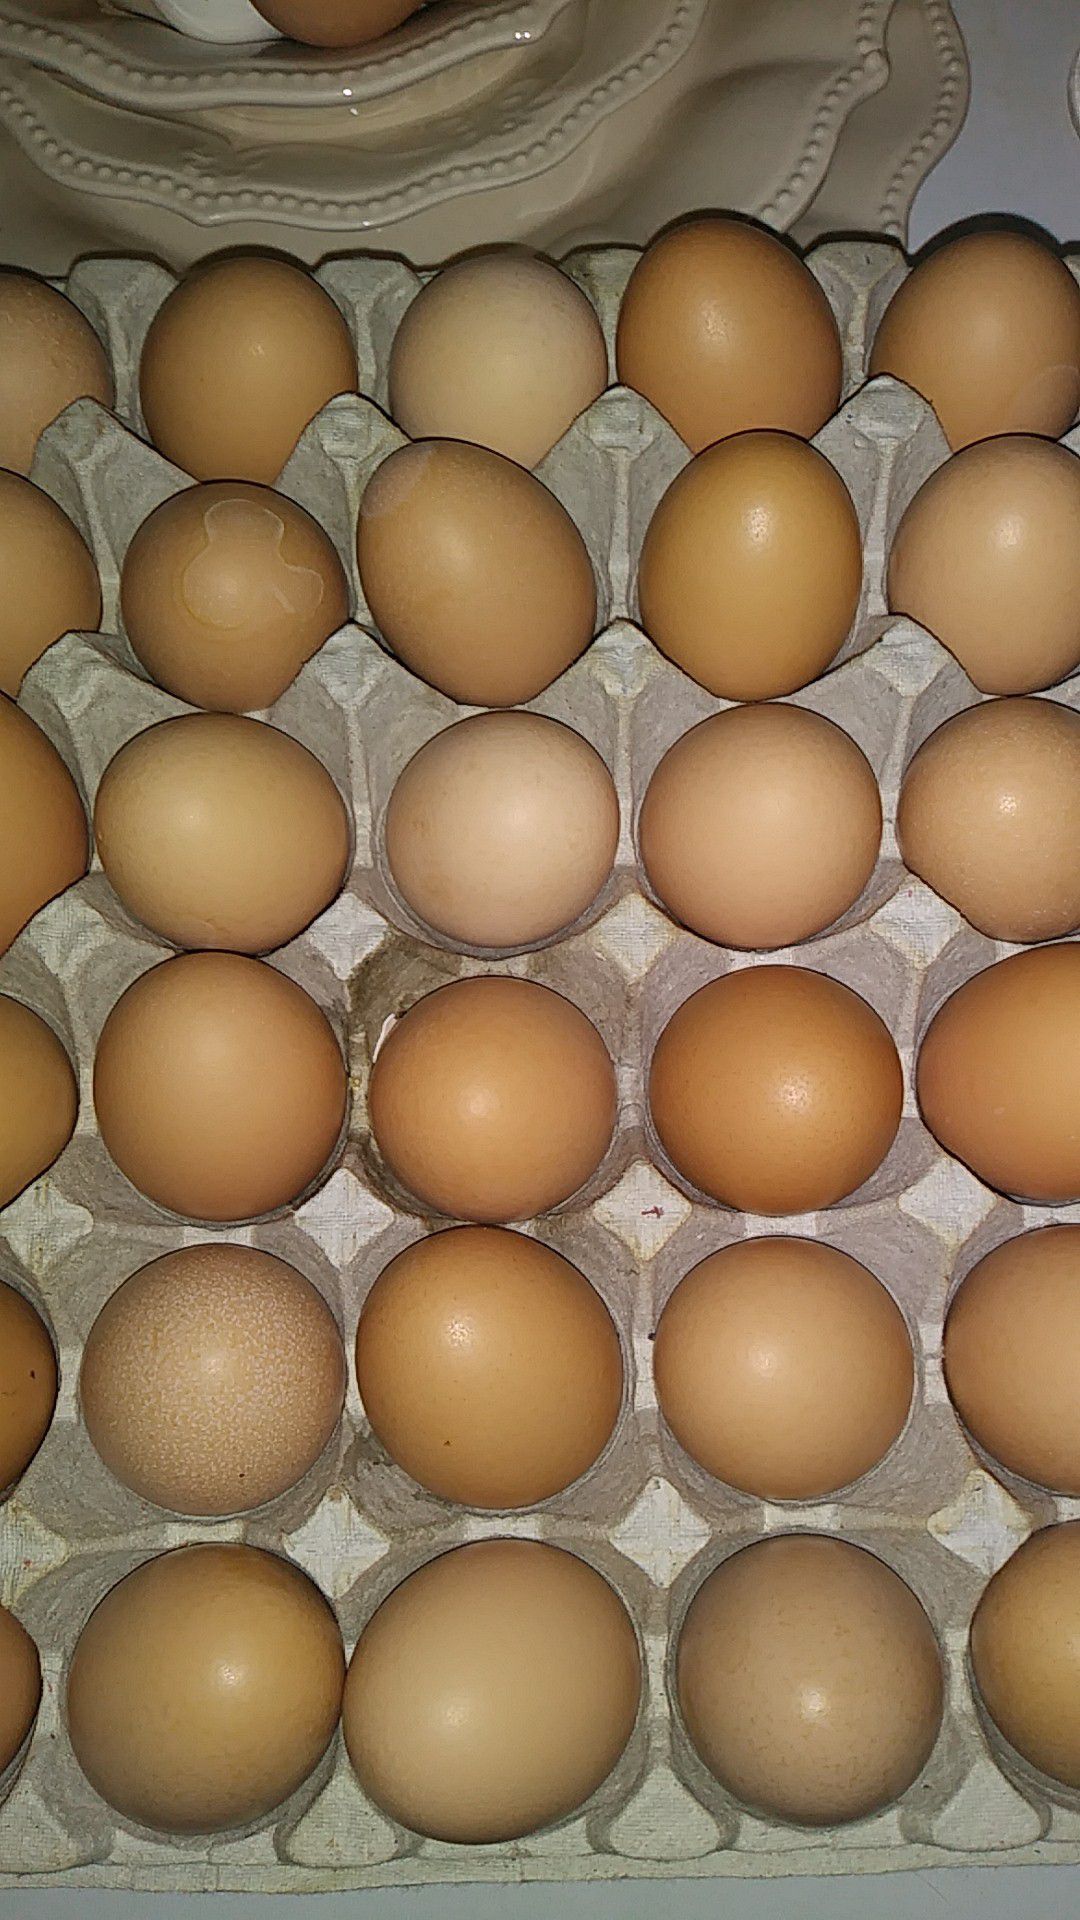 Fresh eggs free range